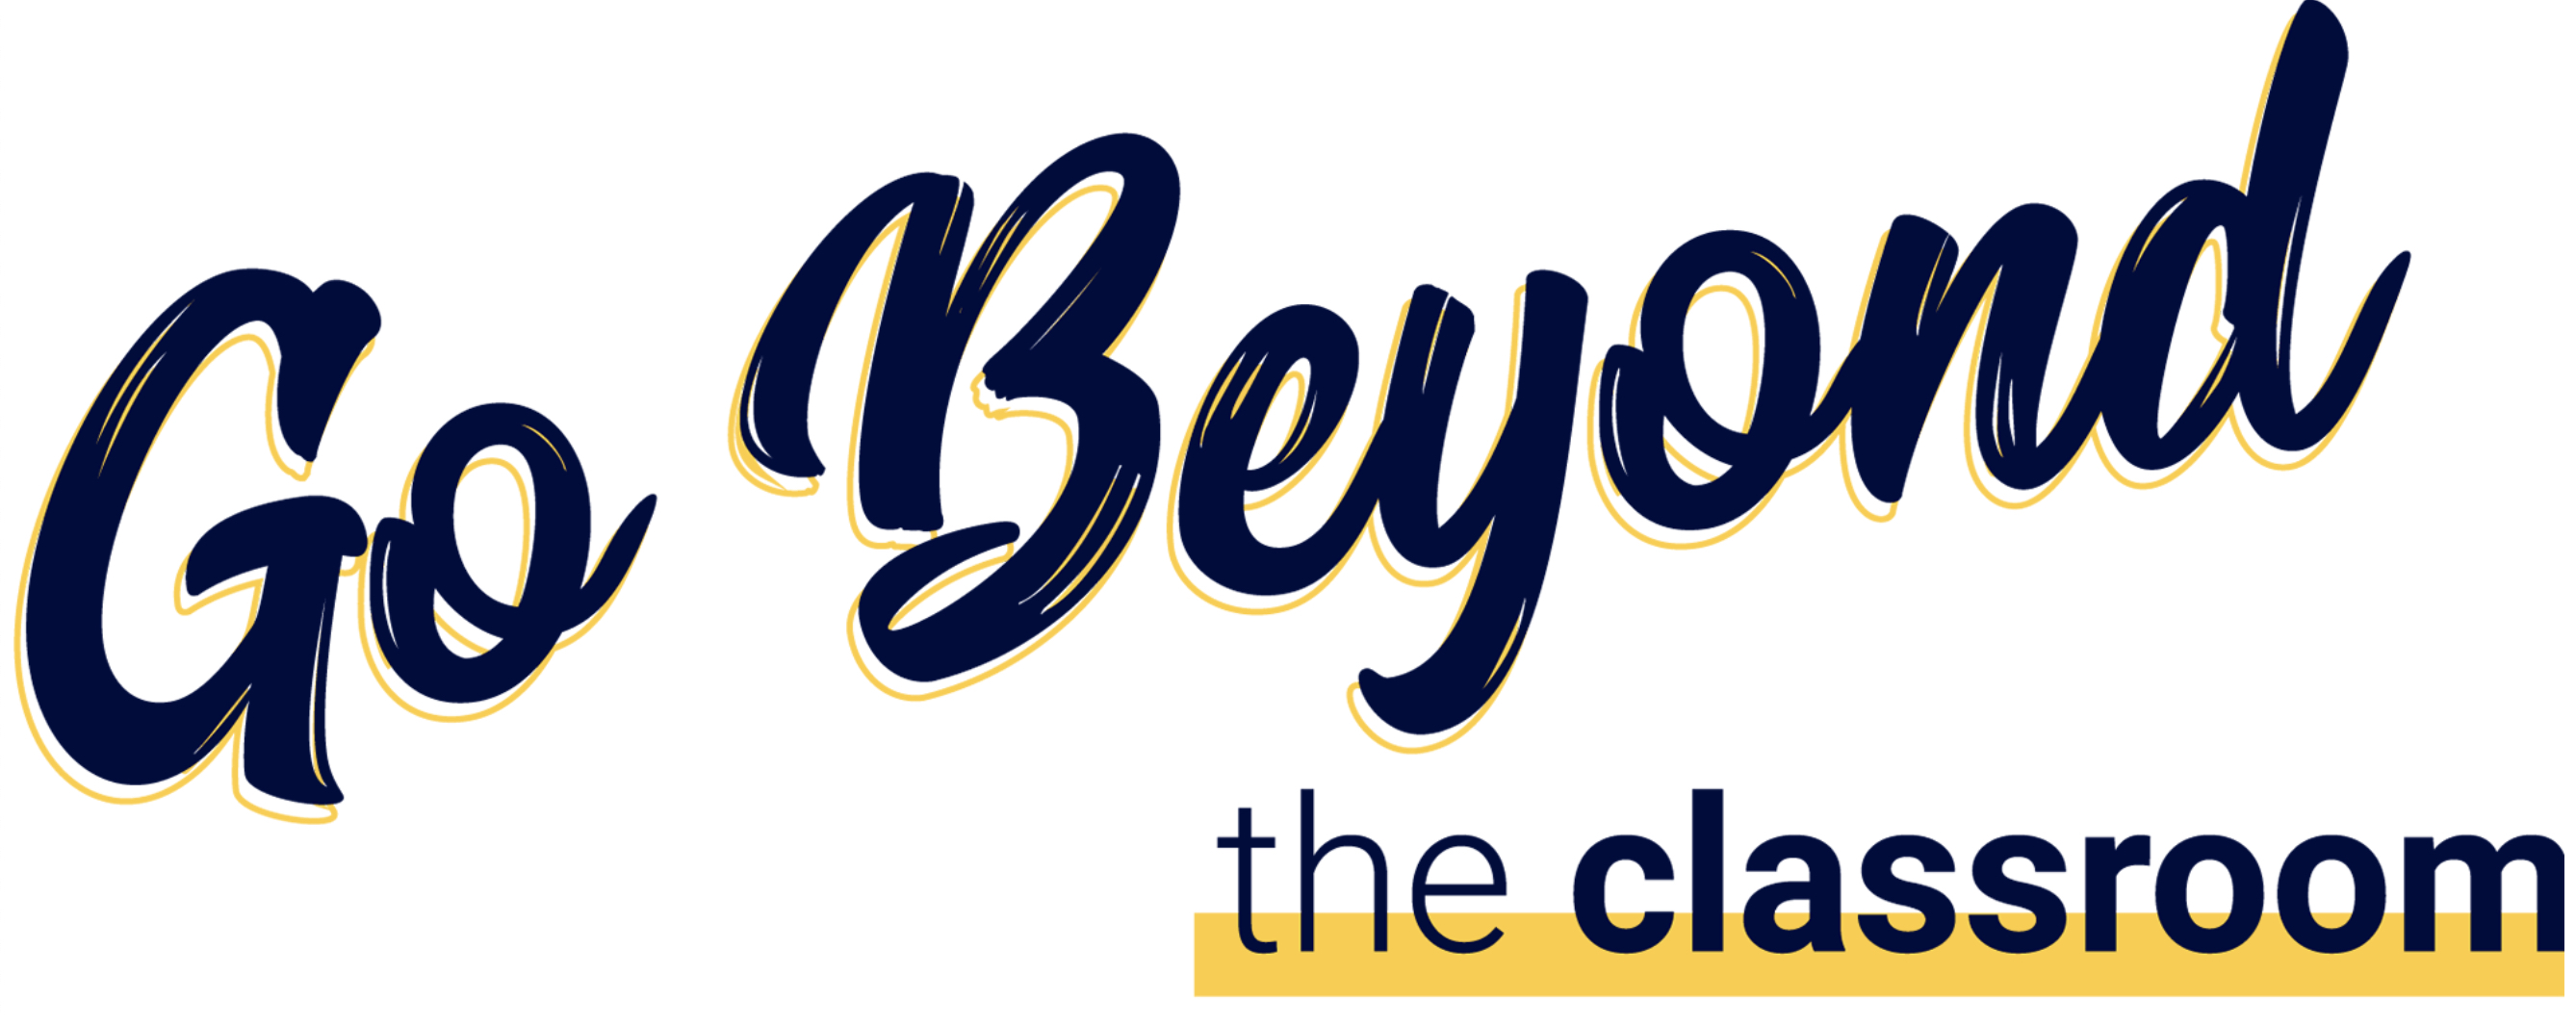 Go Beyond the Classroom